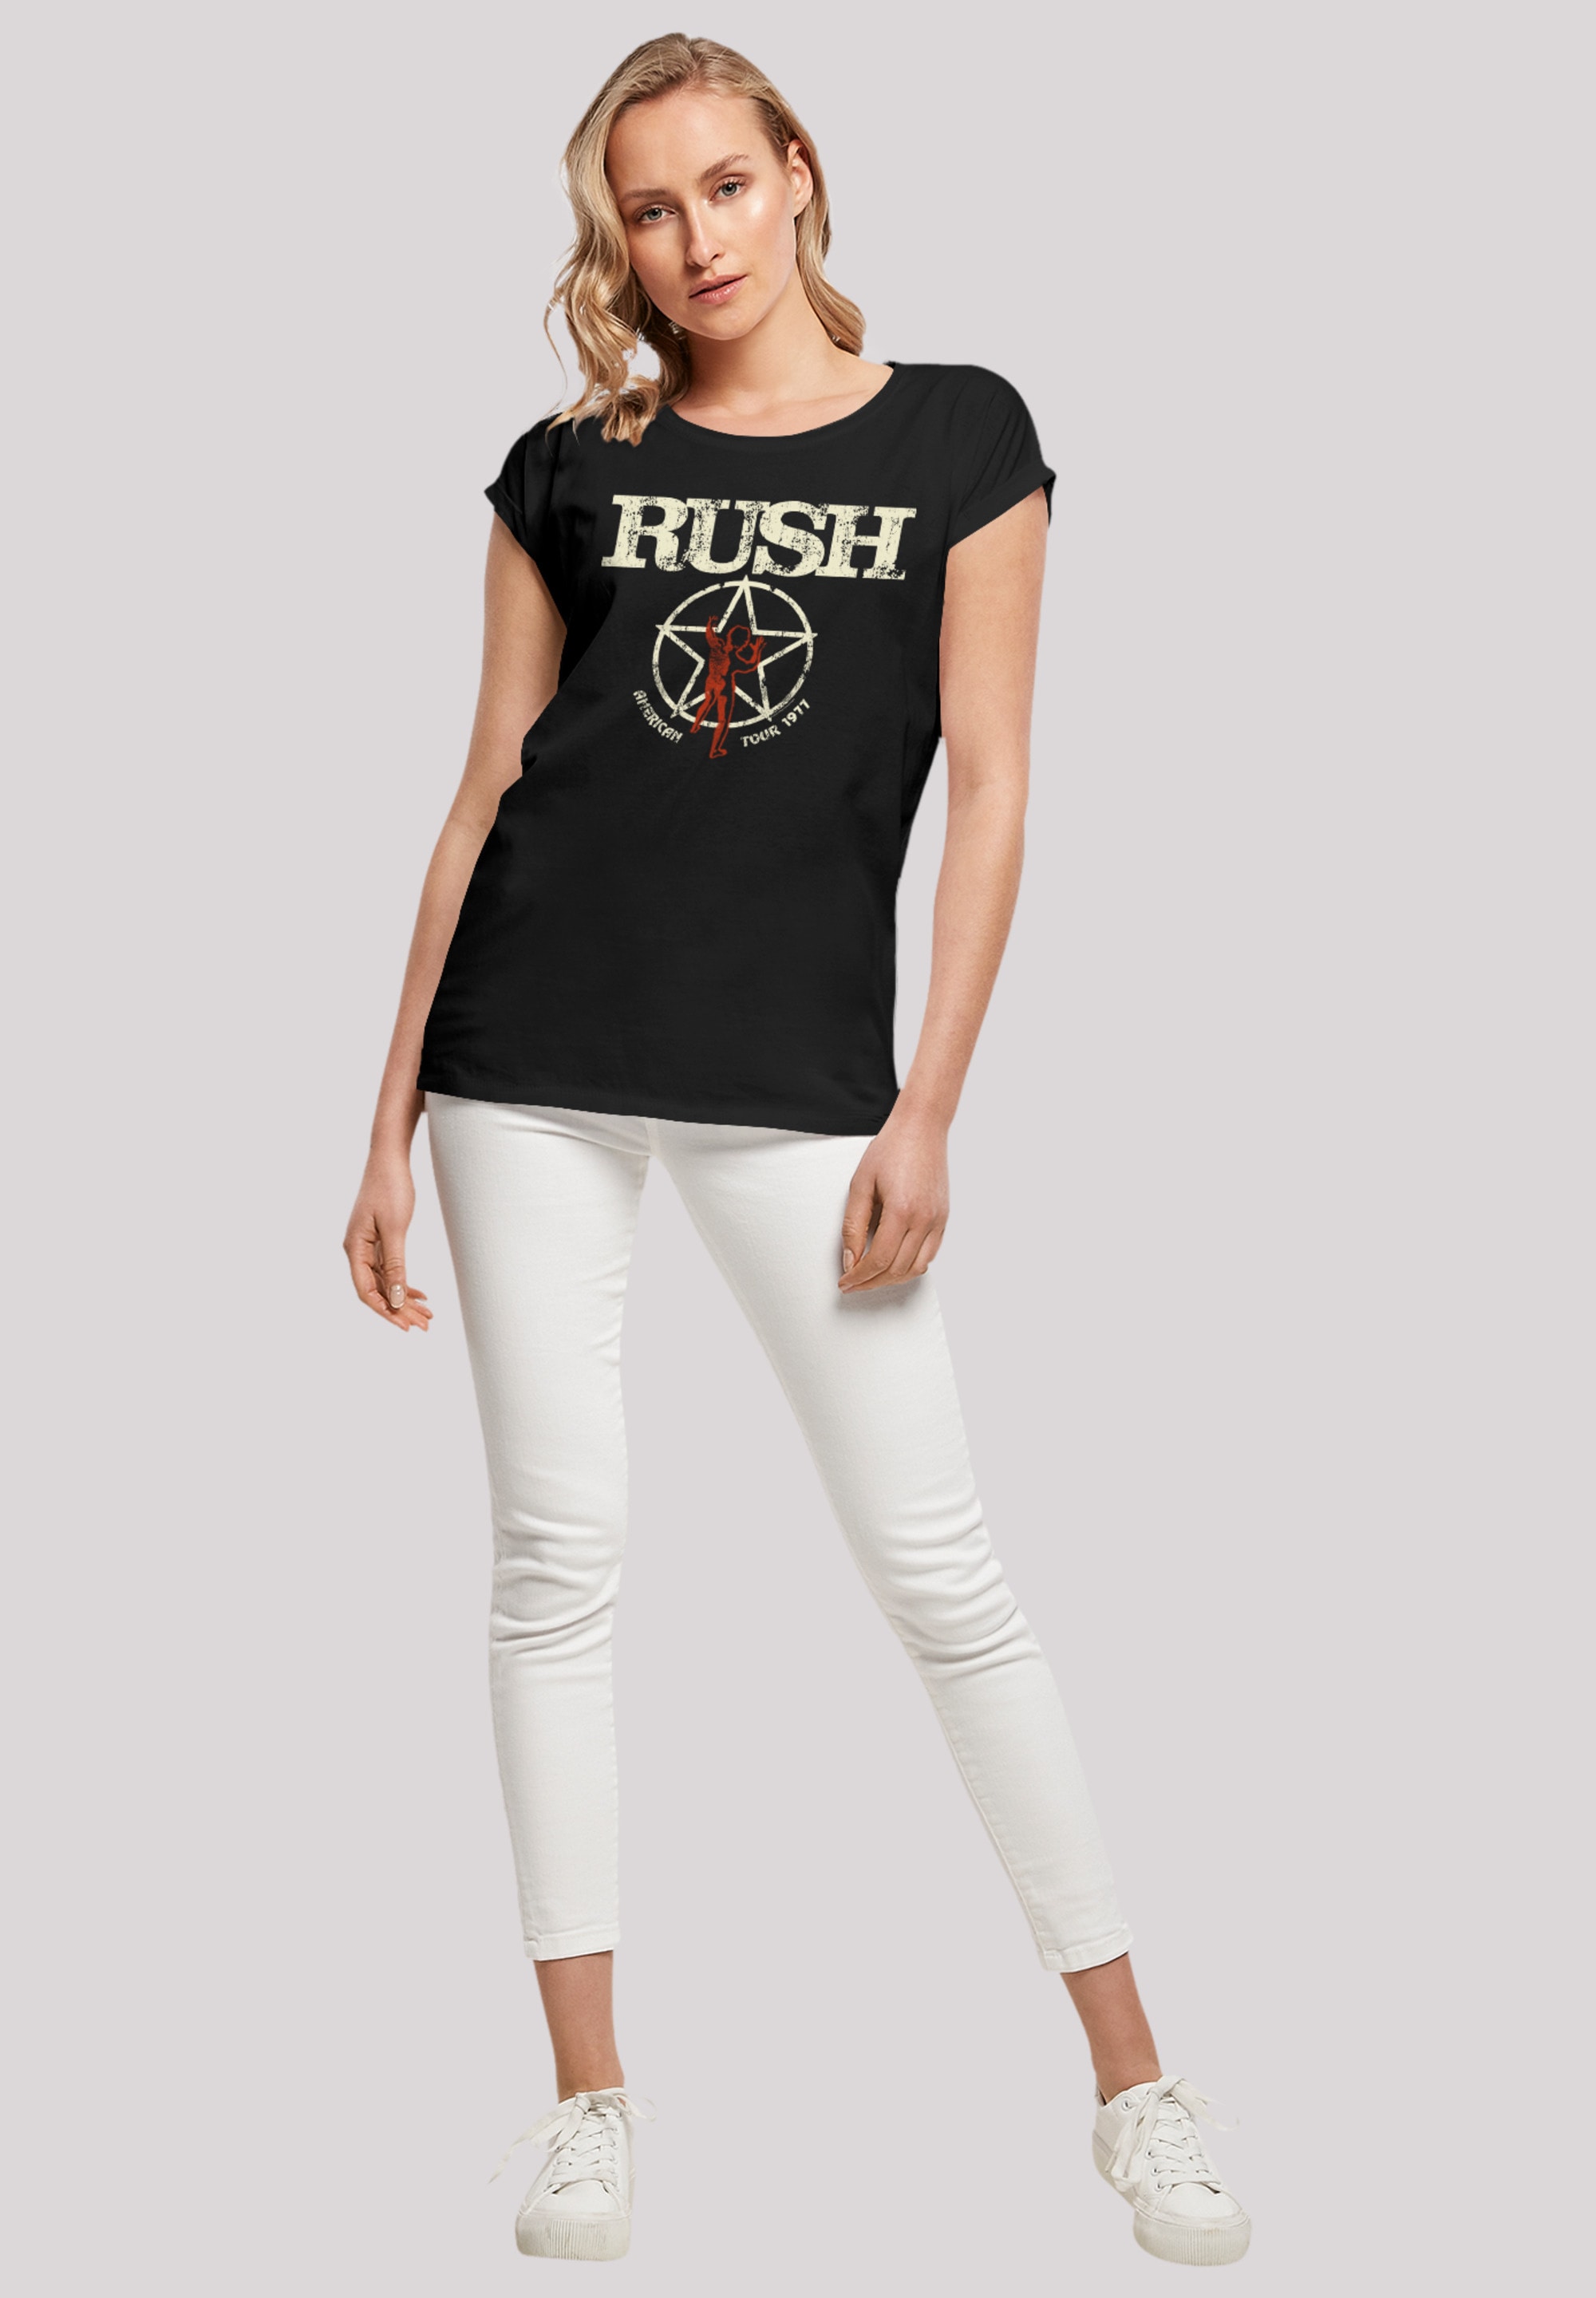 F4NT4STIC T-Shirt »Rush Rock 1977«, walking Qualität Premium Band kaufen | American online Tour I\'m